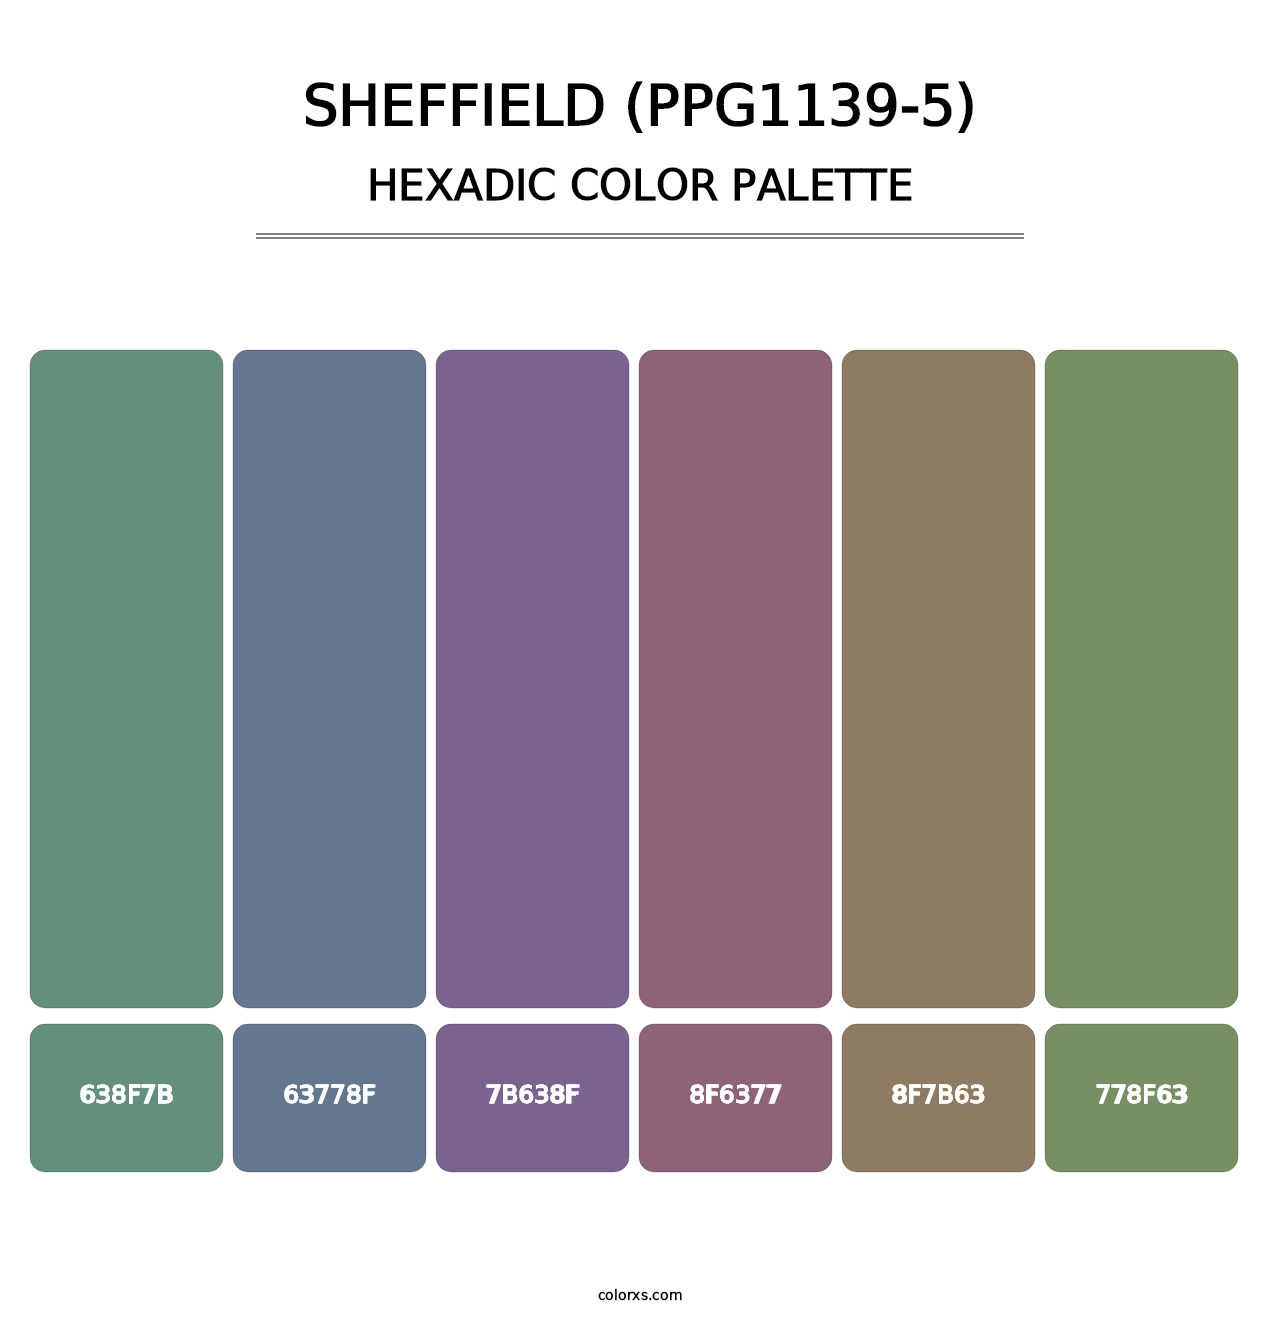 Sheffield (PPG1139-5) - Hexadic Color Palette